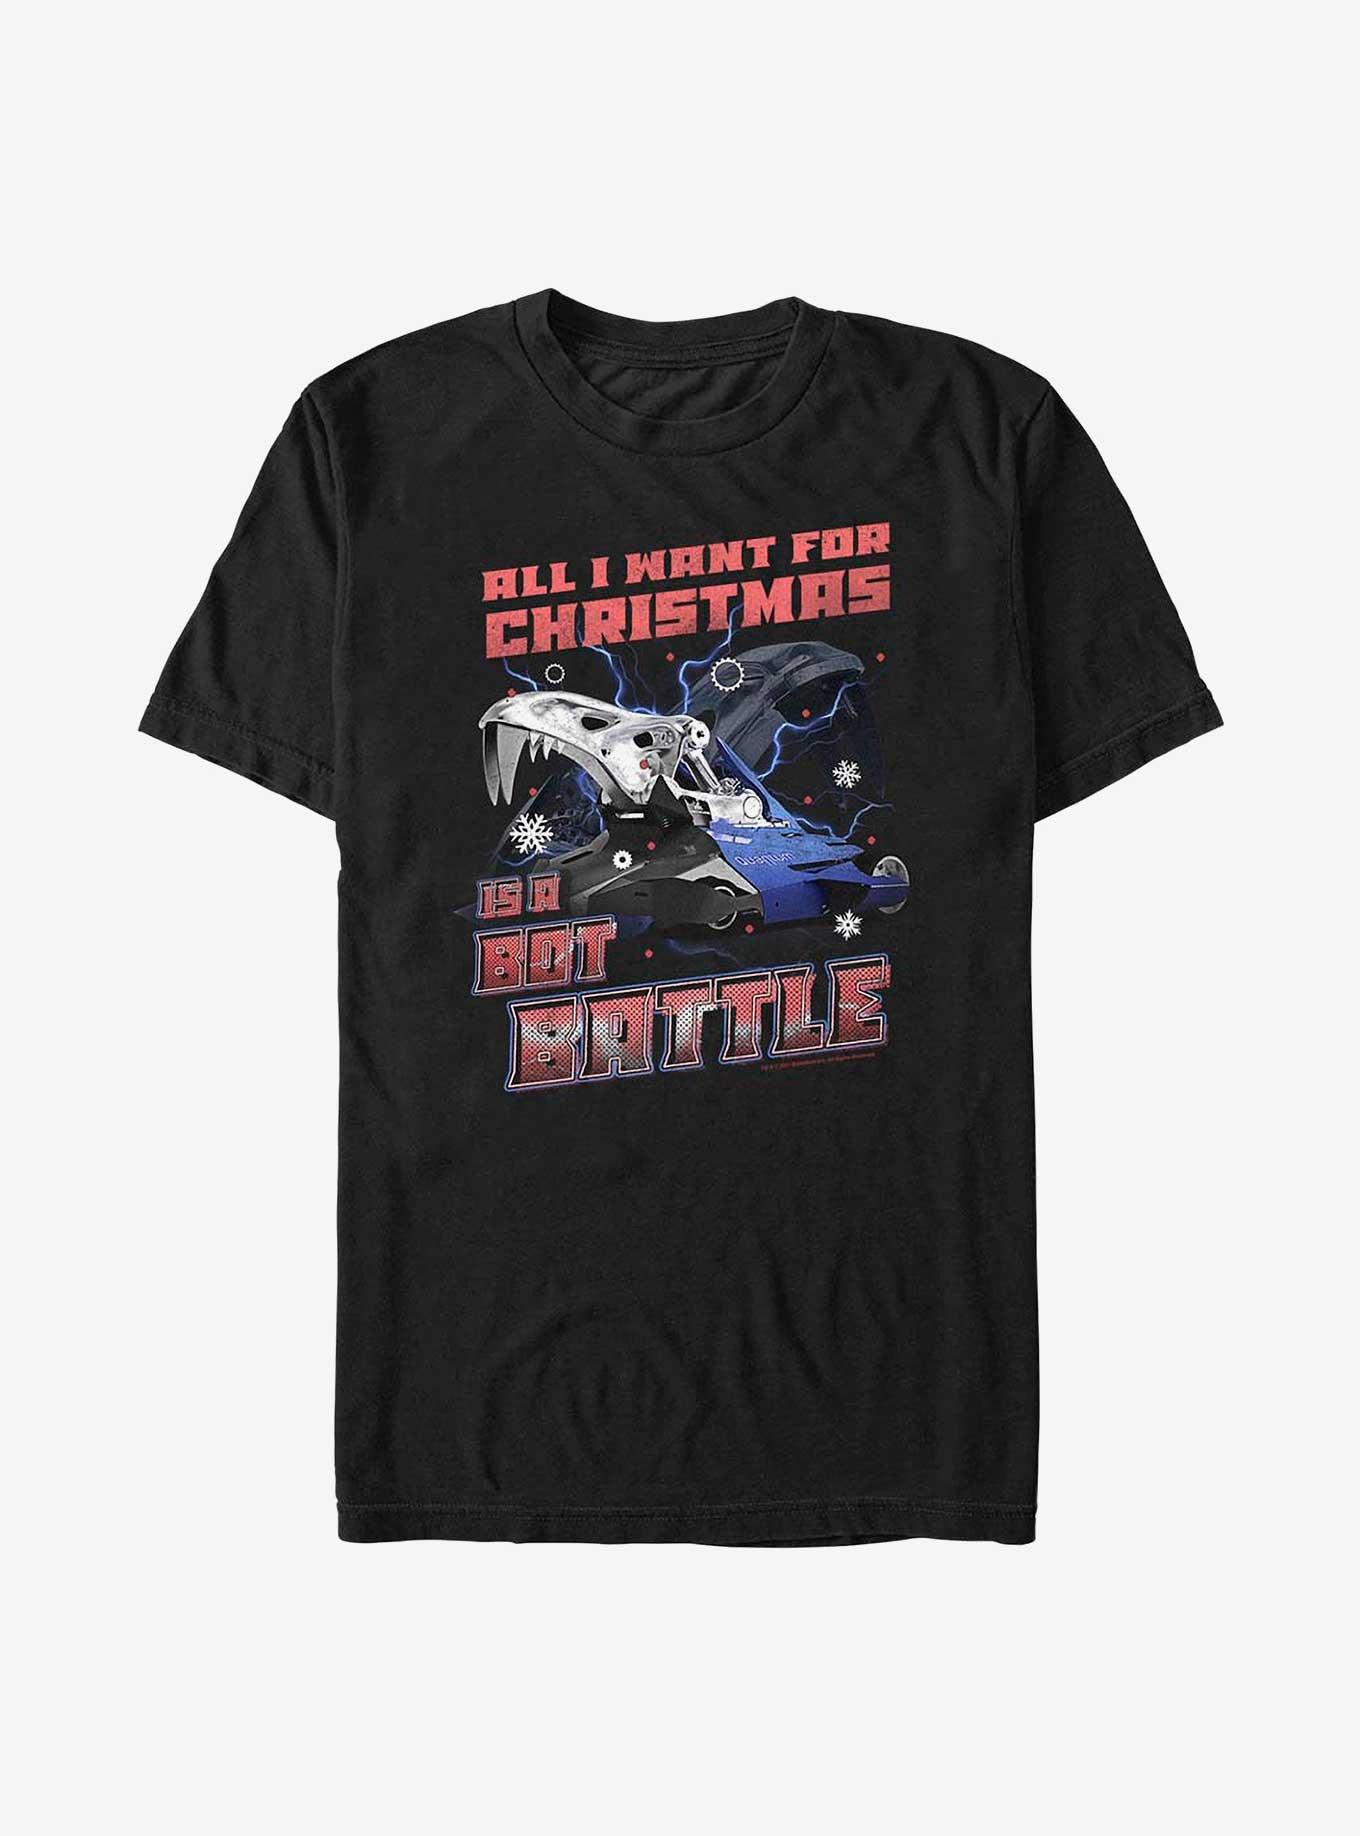 BattleBots Bot Battle T-Shirt, , hi-res